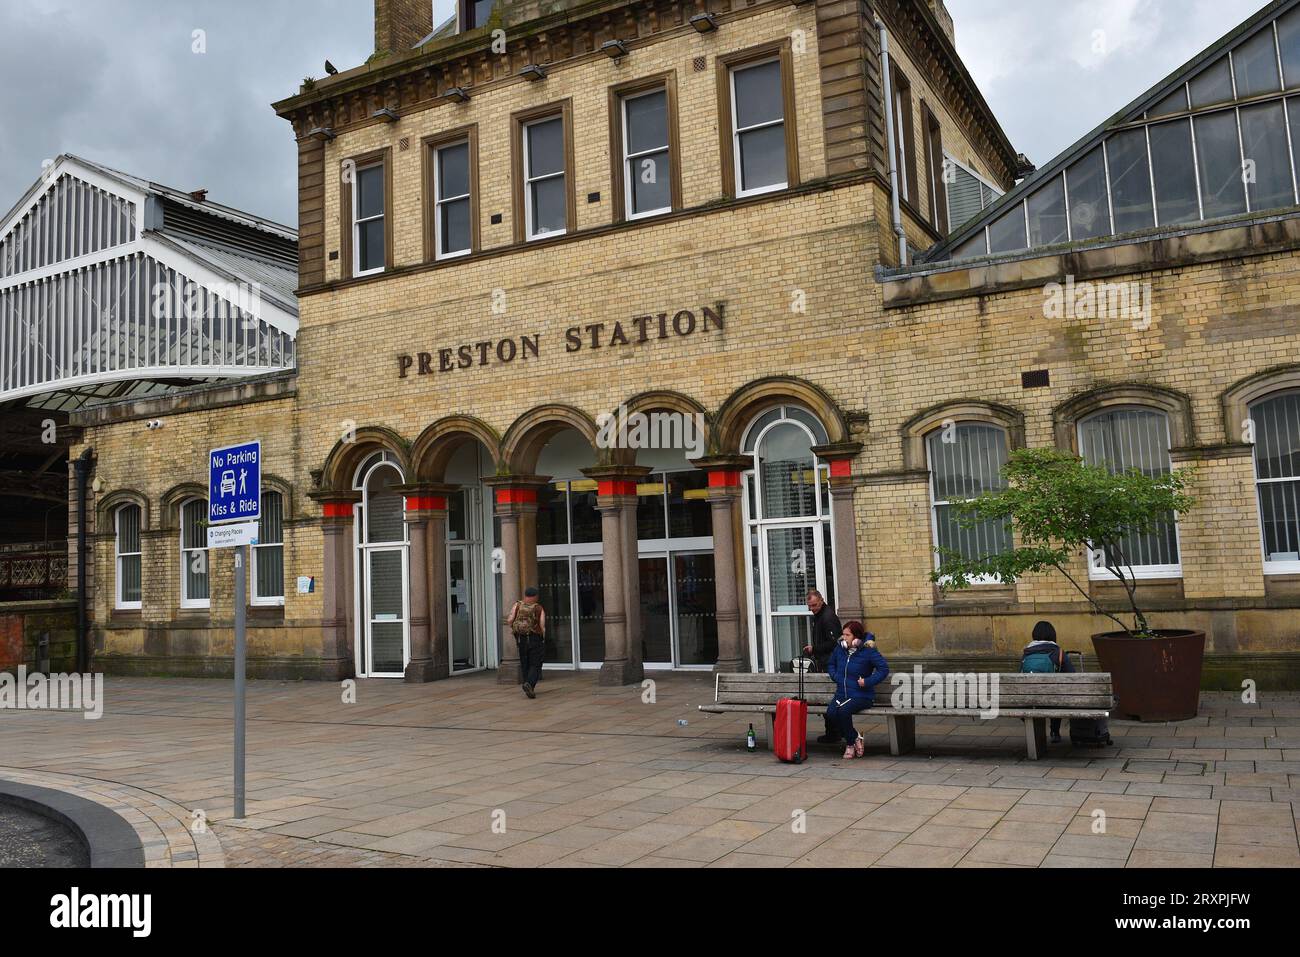 Gare de Preston. Banque D'Images